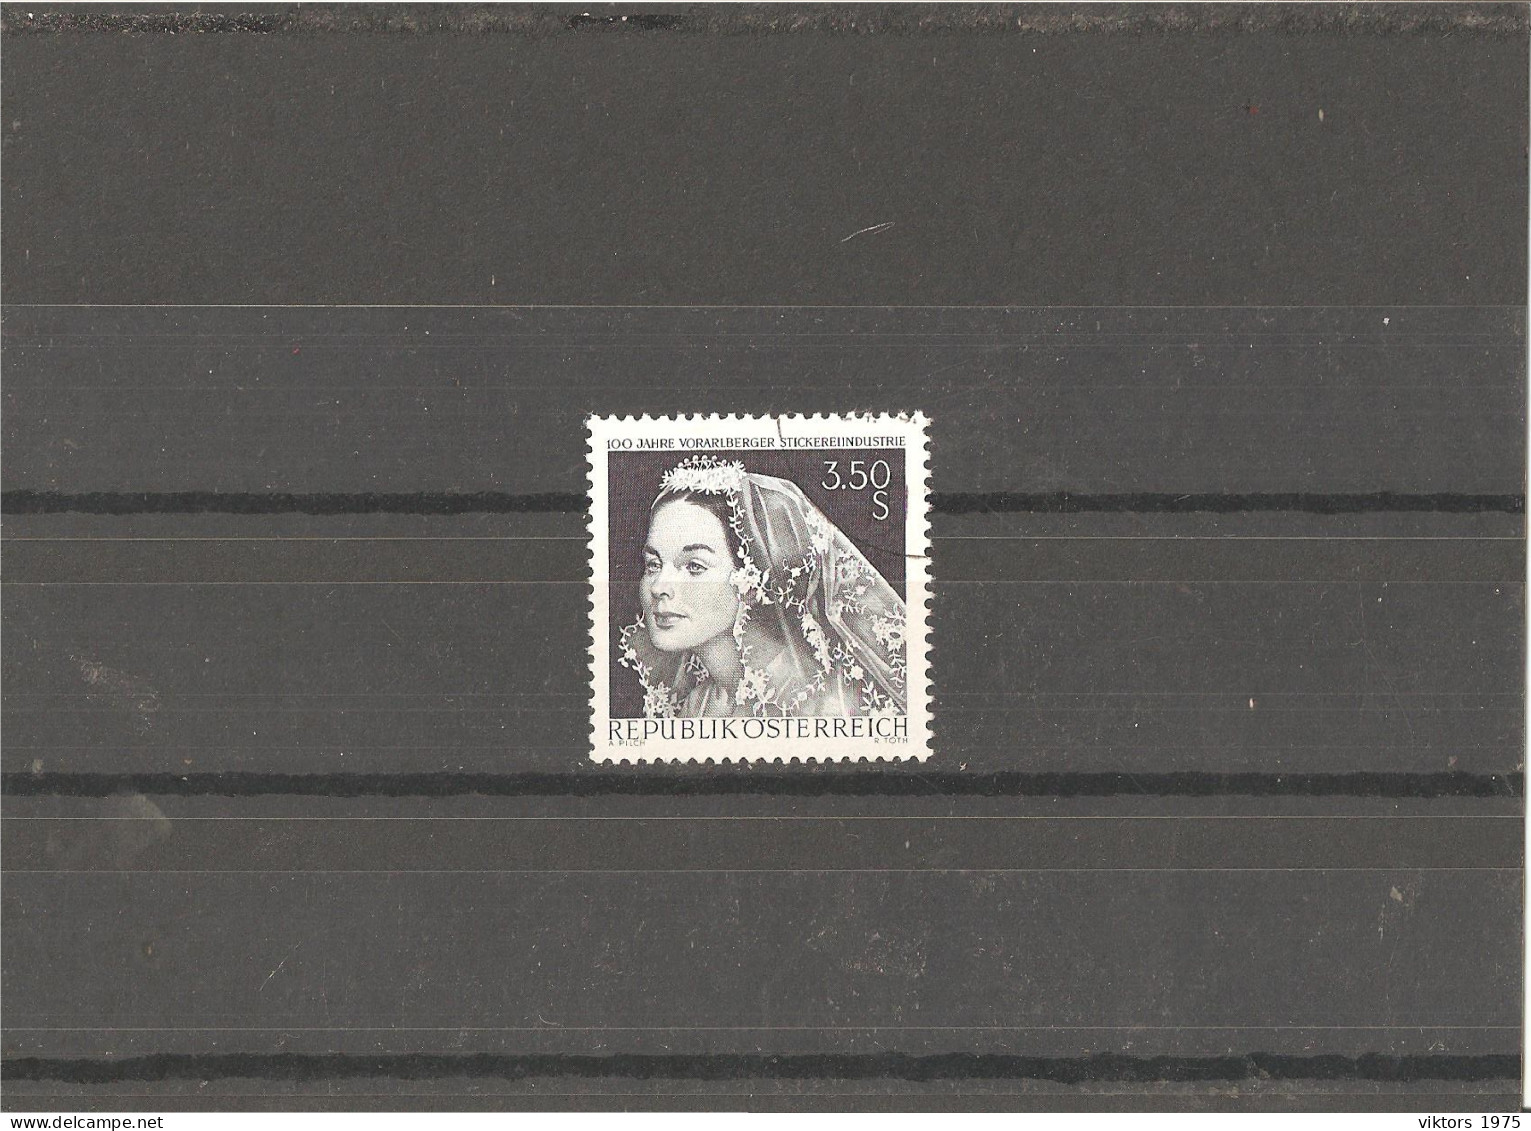 Used Stamp Nr.1261 In MICHEL Catalog - Oblitérés